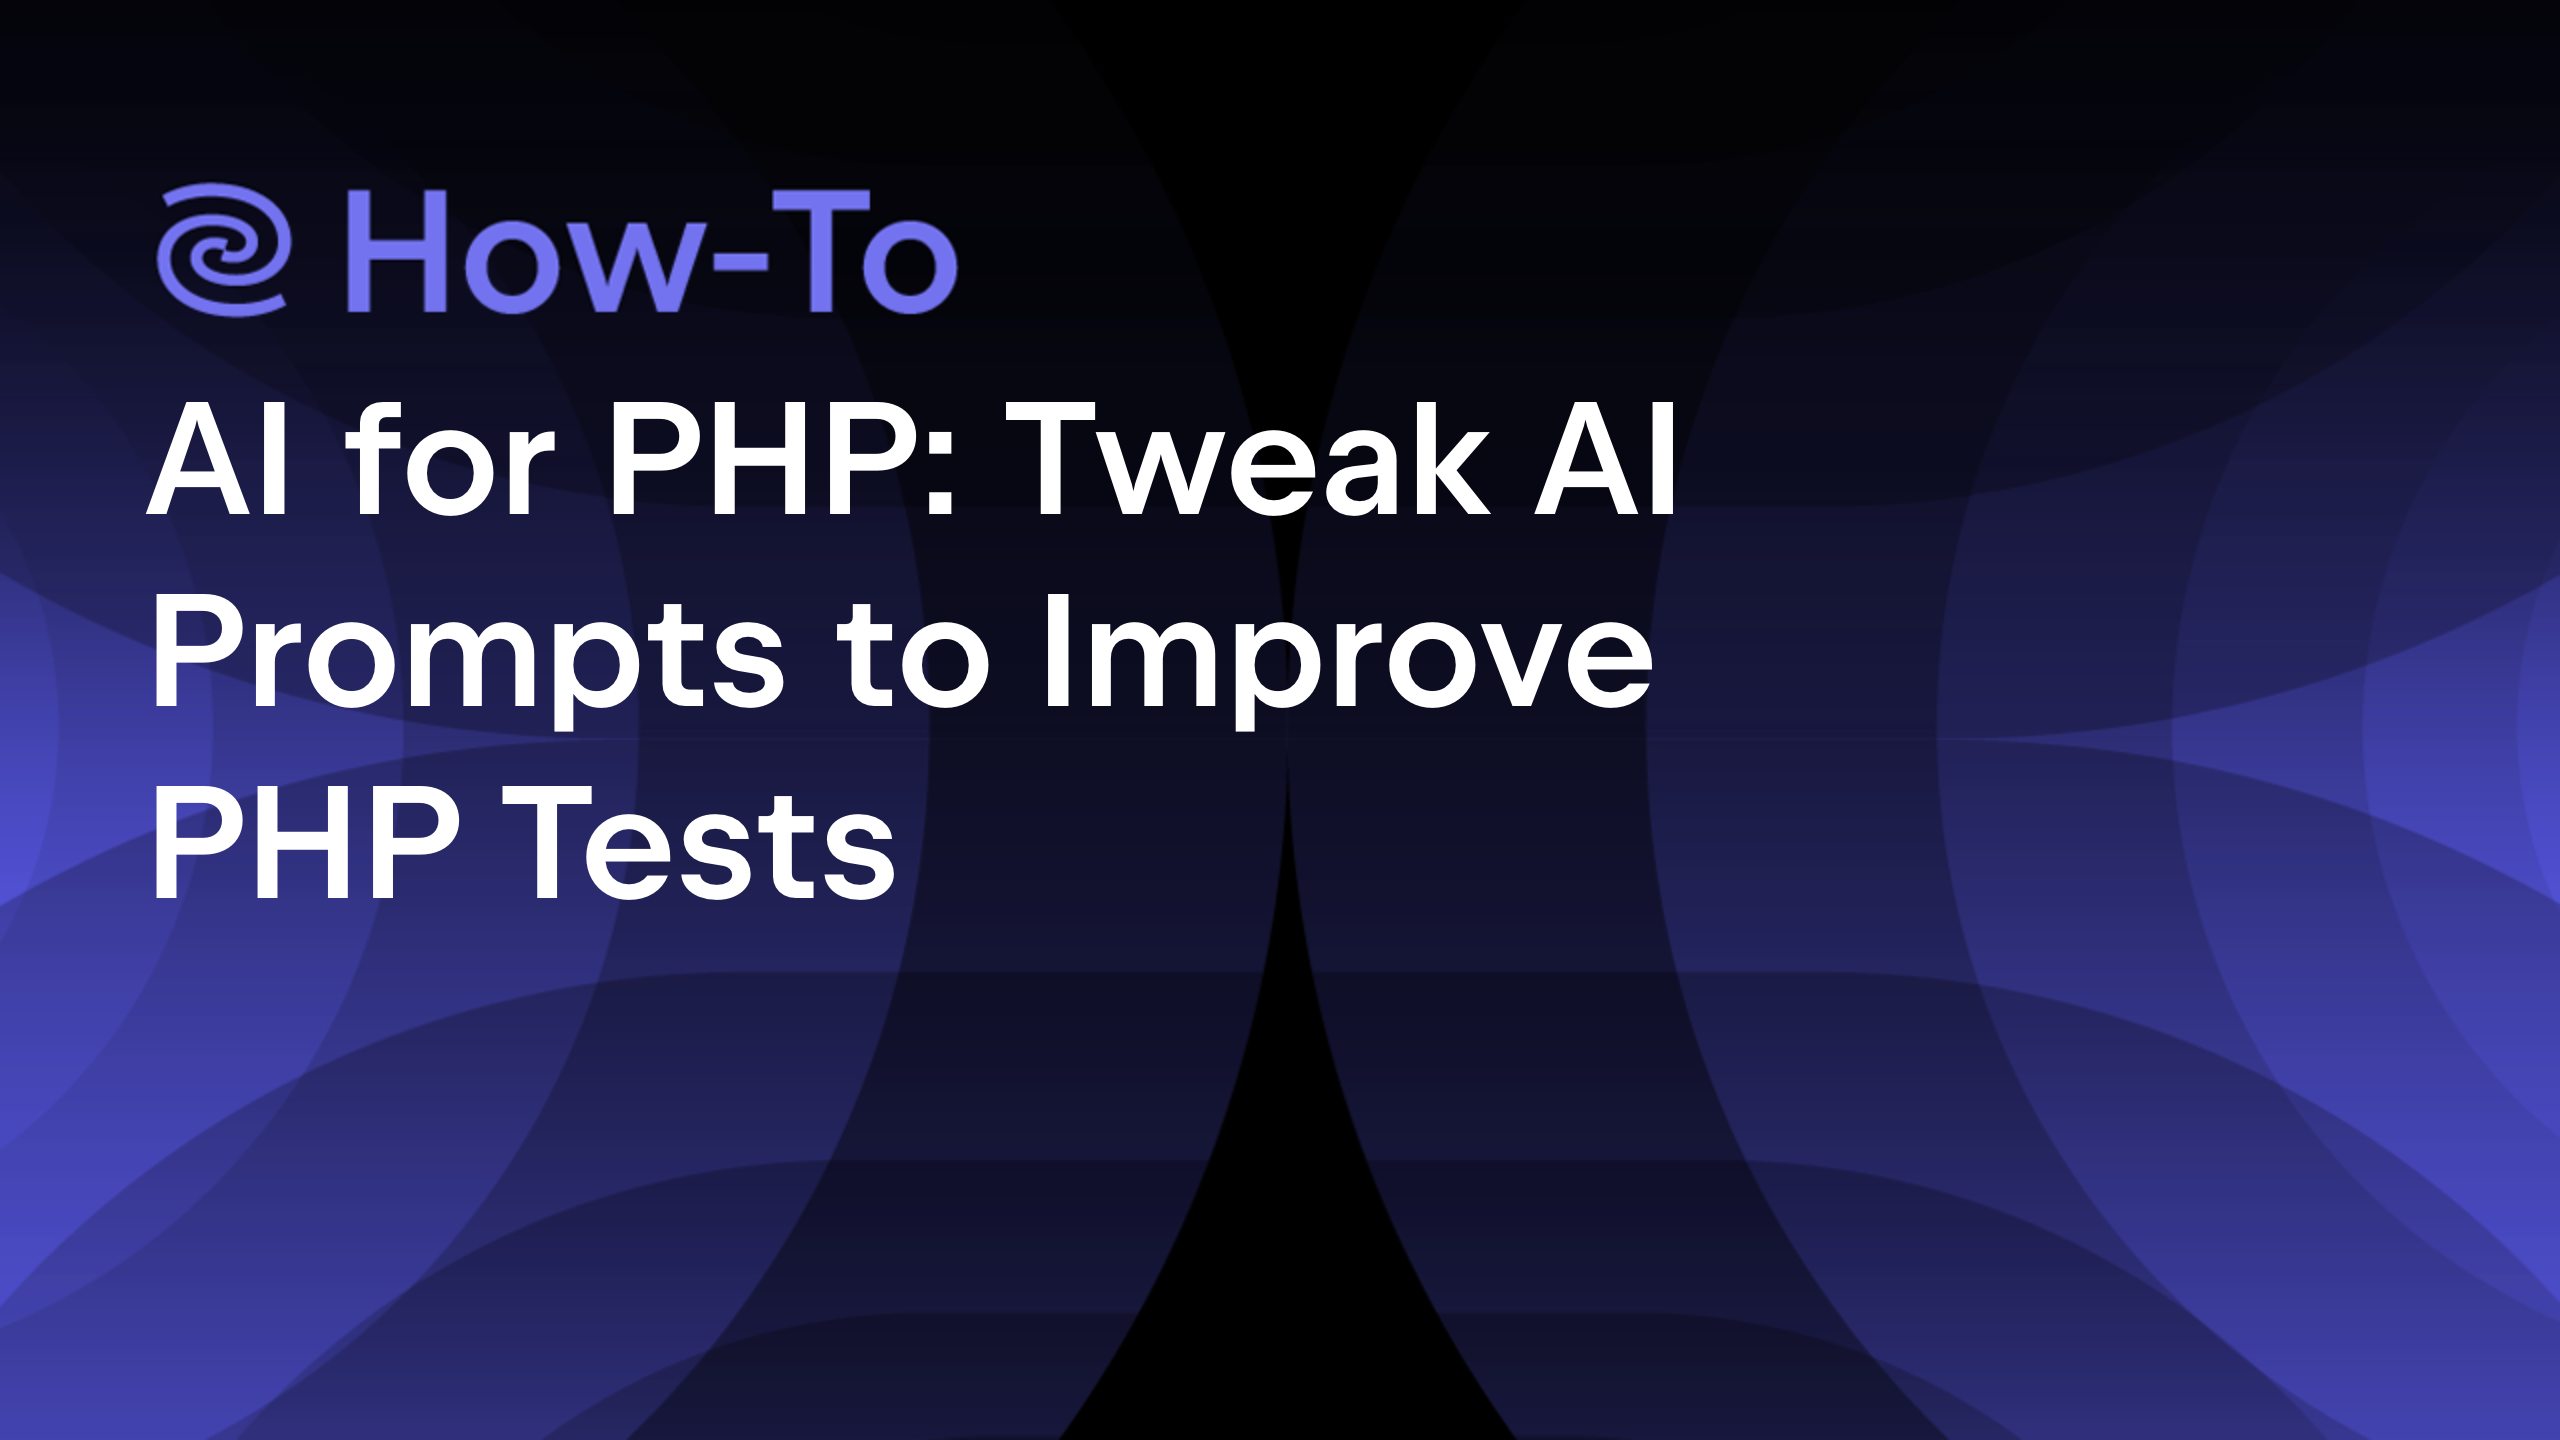 Tweak AI Prompts to Improve PHP Tests in PhpStorm